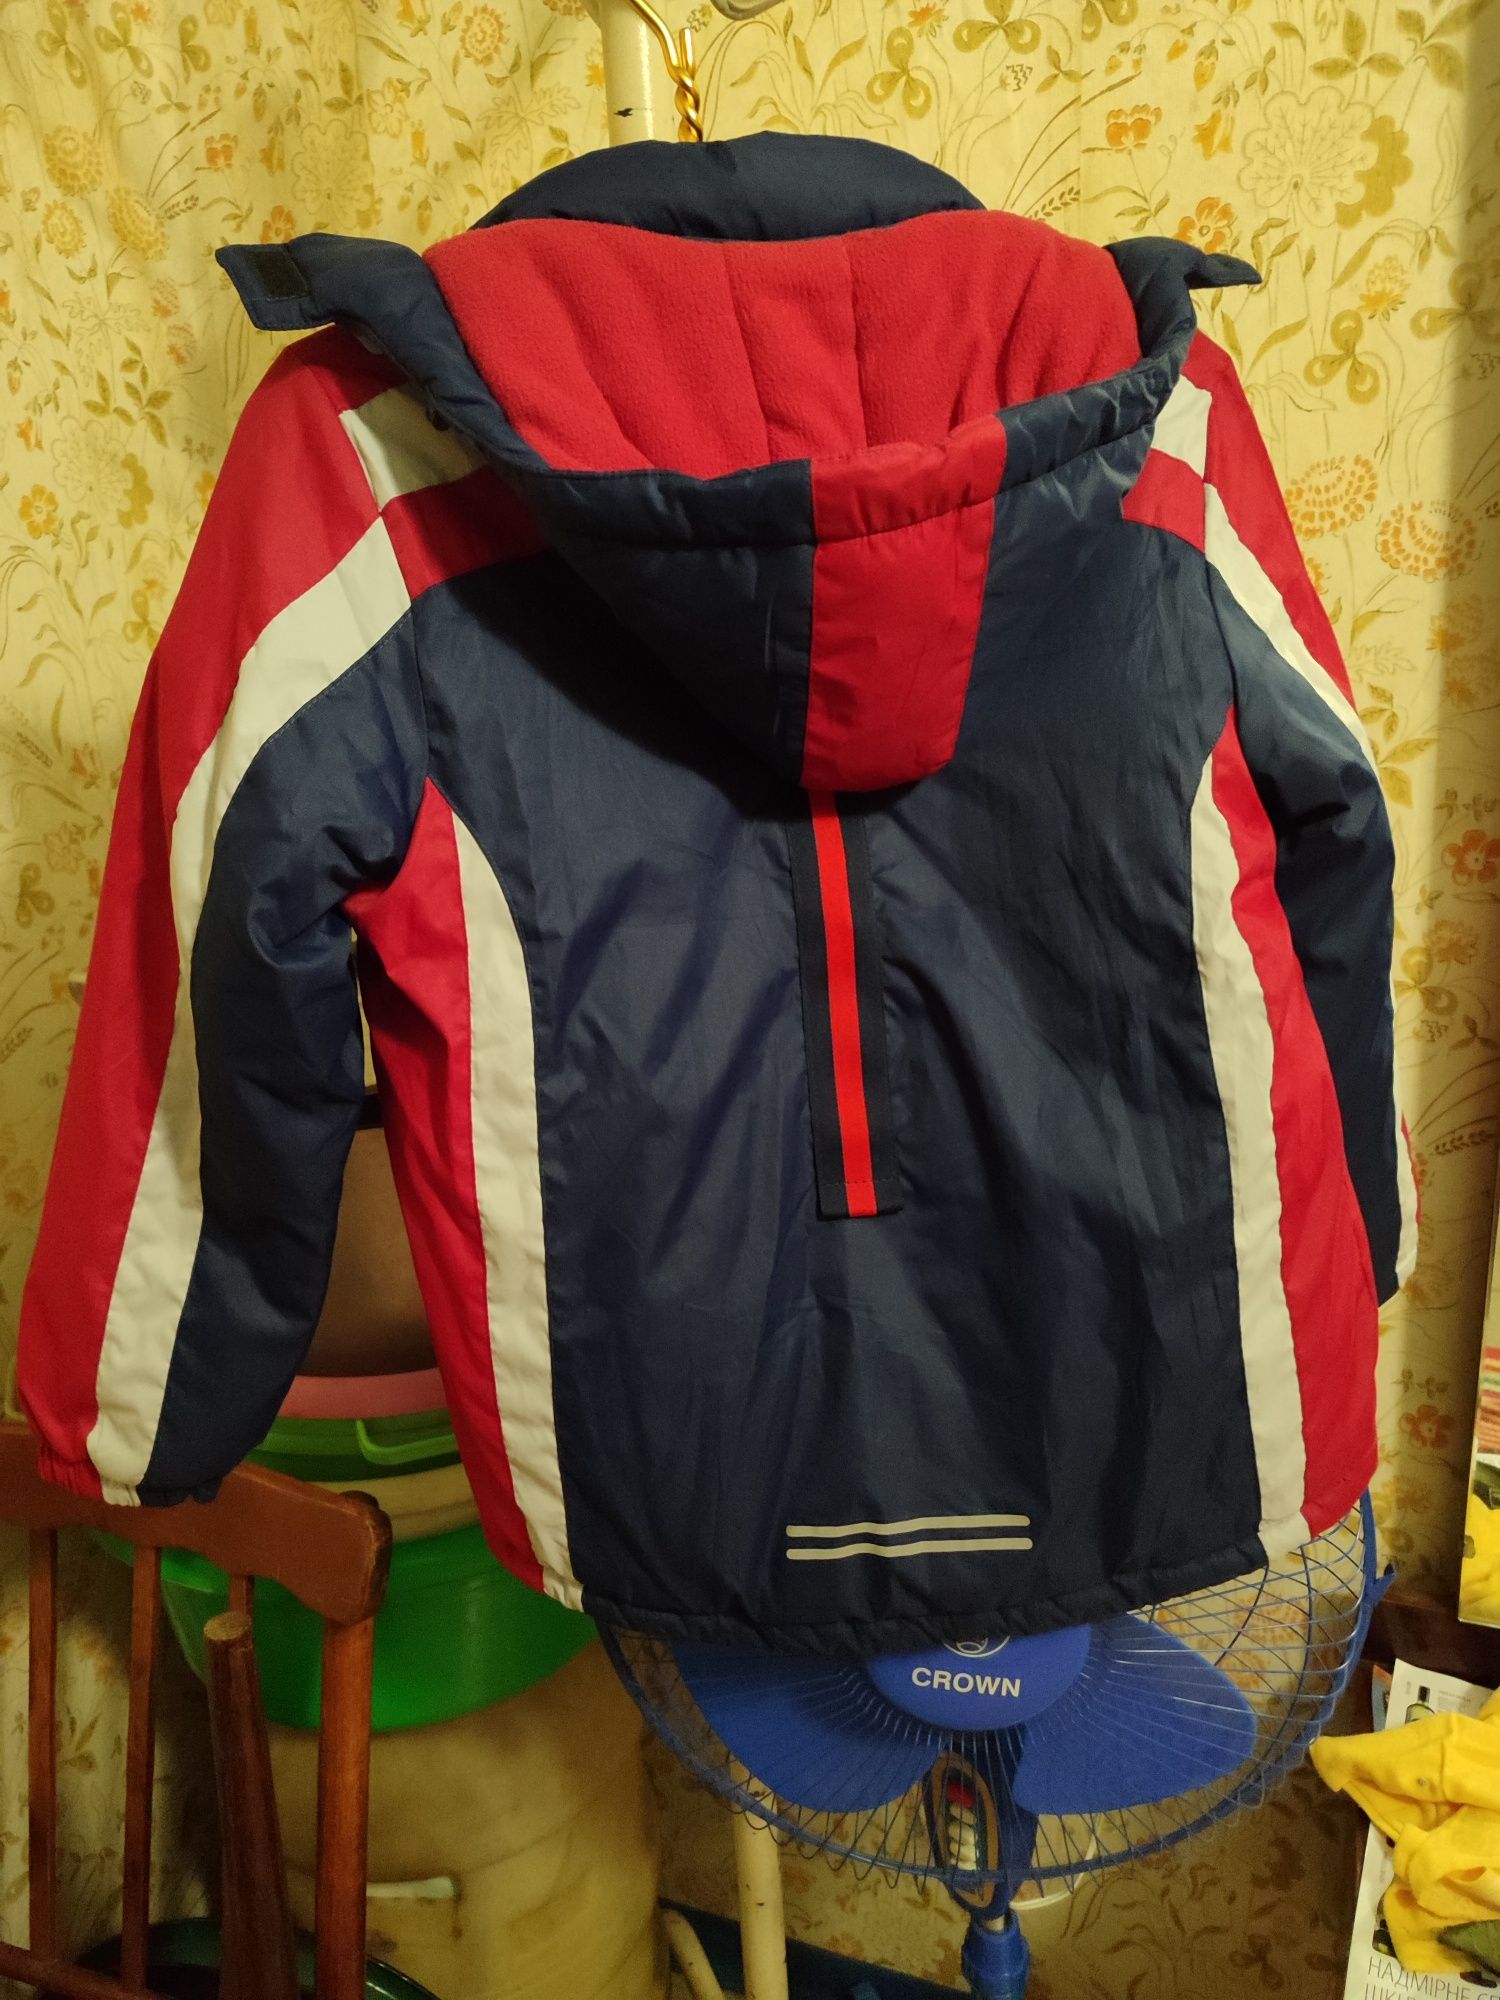 Куртка на зиму для мальчика